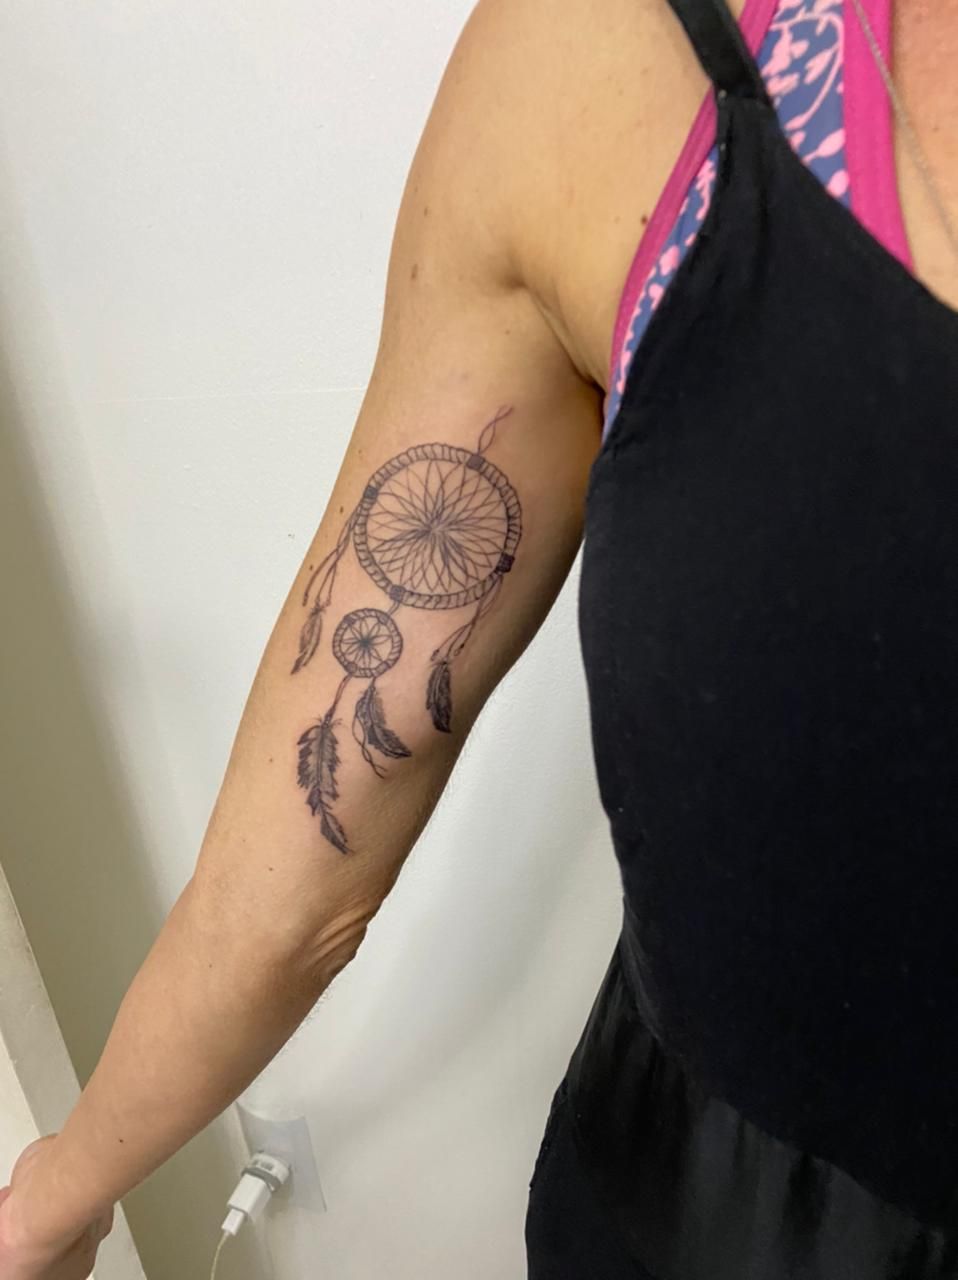 Tattoo uploaded by Sara Rose • Dream catcher under boob tattoo